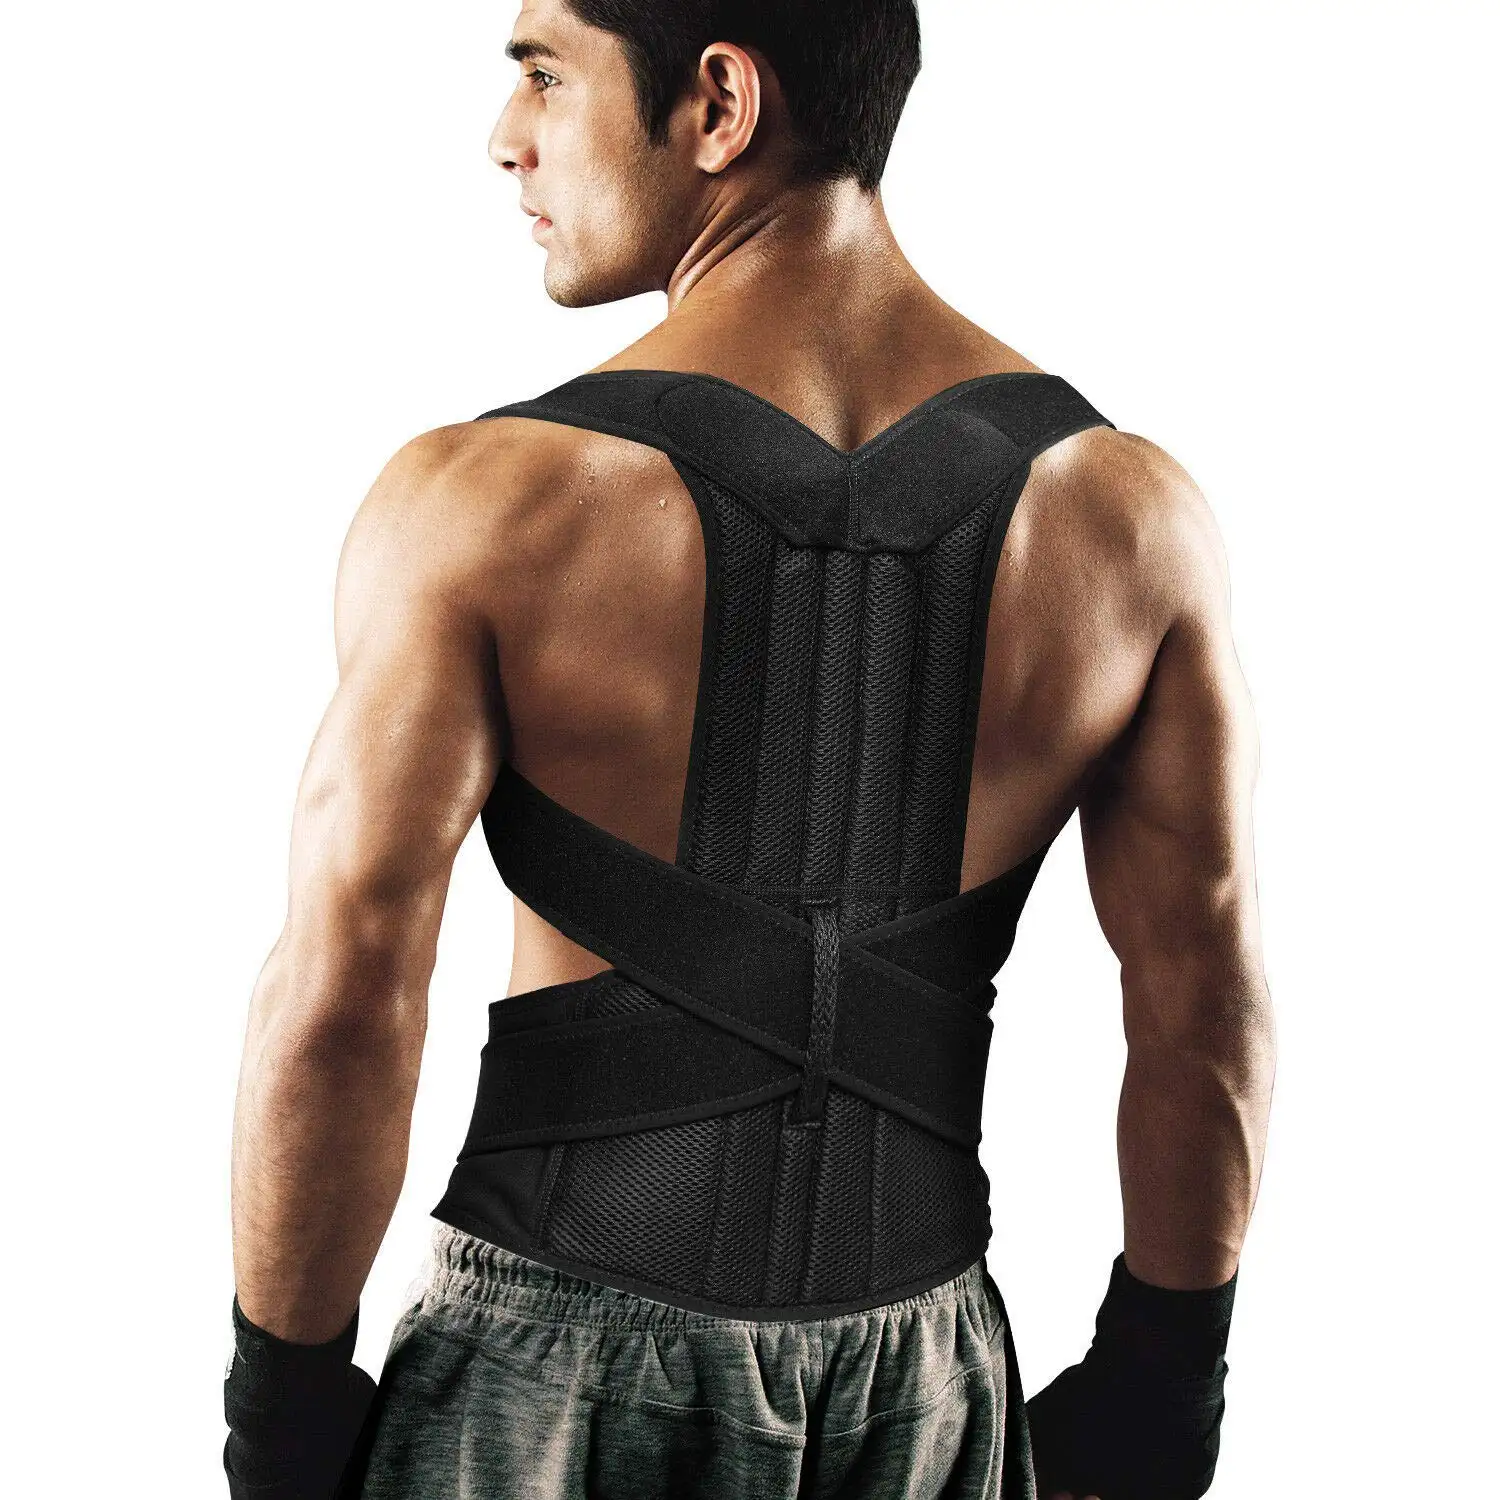 Amazon Sales Posture Corrector Back Lumbar Support Belt Adjustable Back Brace Posture Corrector for Men and Women